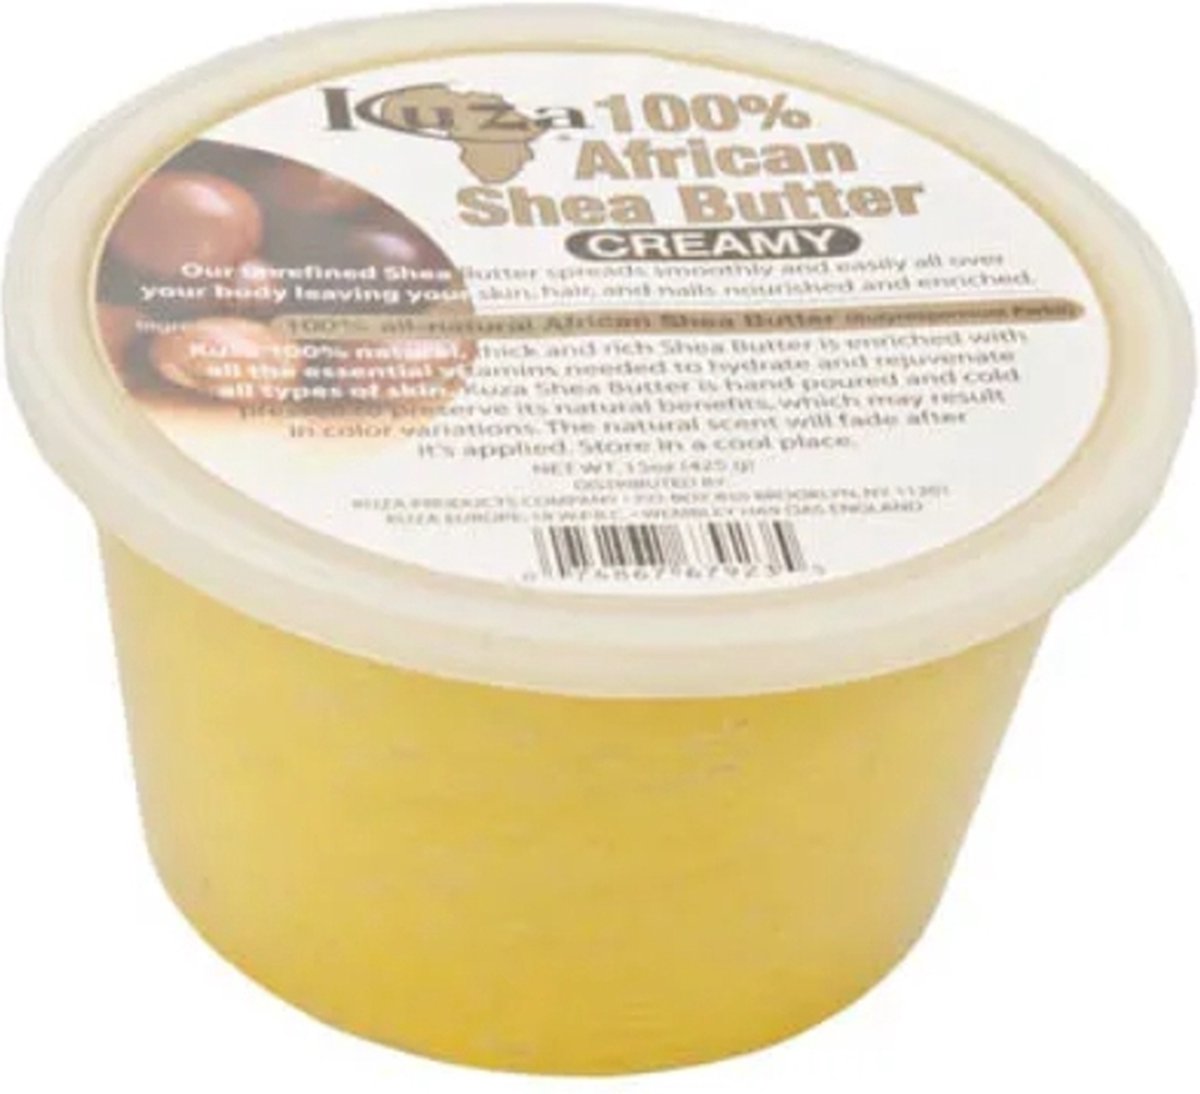 Kuza 100% African Shea Butter Creamy 425gr